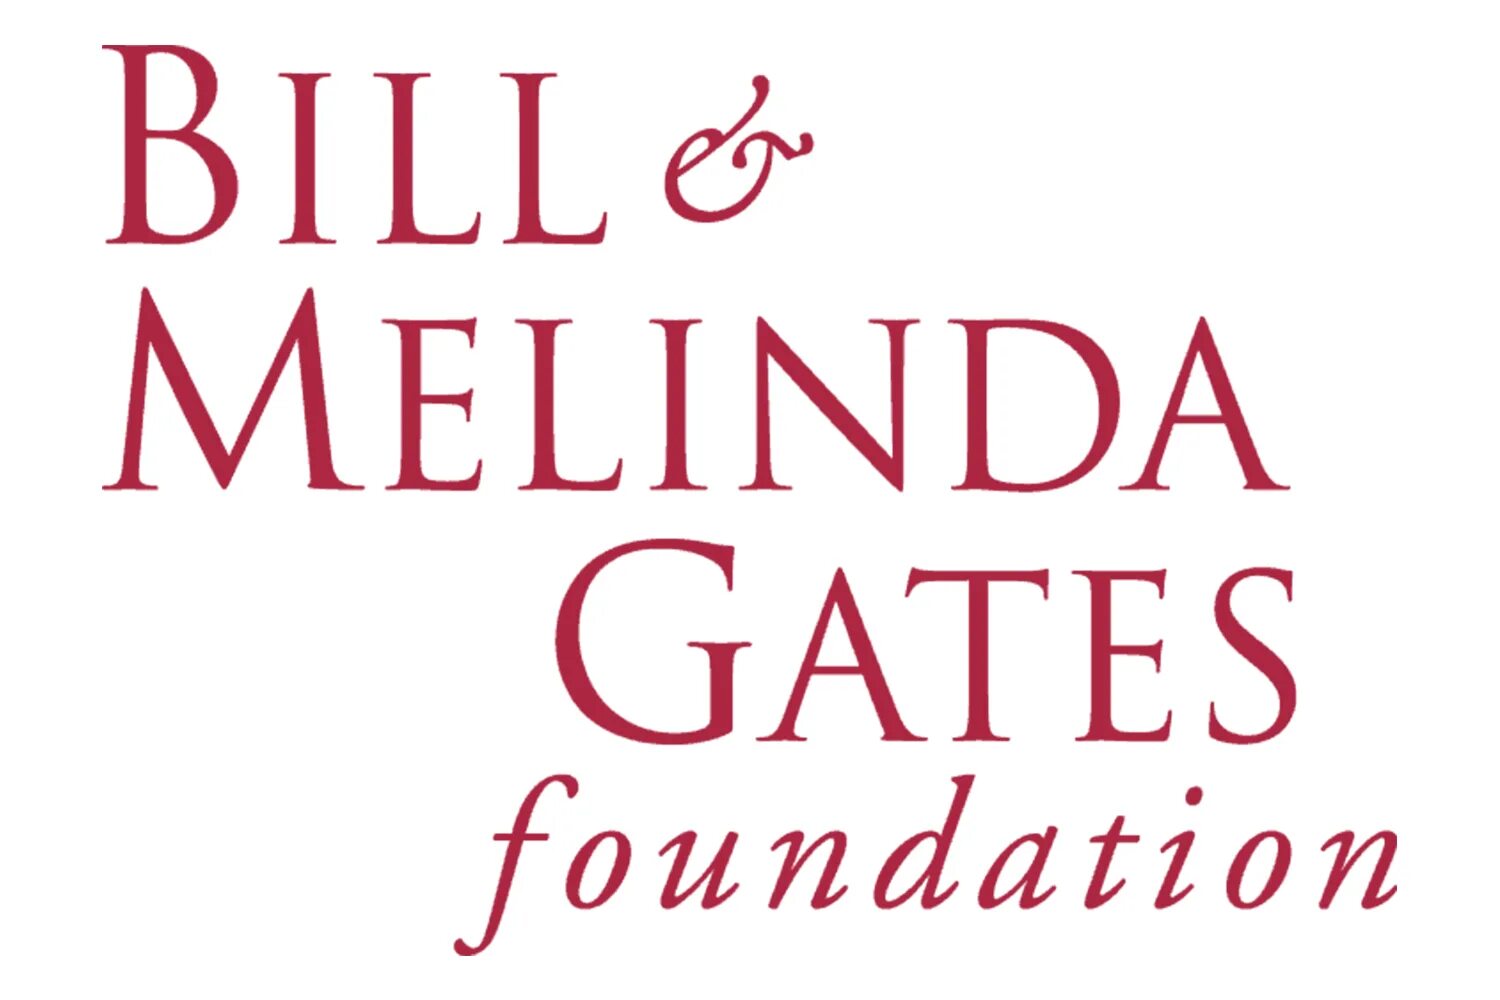 Bill and Melinda Gates Foundation. Bill & Melinda Gates Foundation логотип. Благотворительный фонд Билла и Мелинды Гейтс. Благотворительный фонд Билла Гейтса.